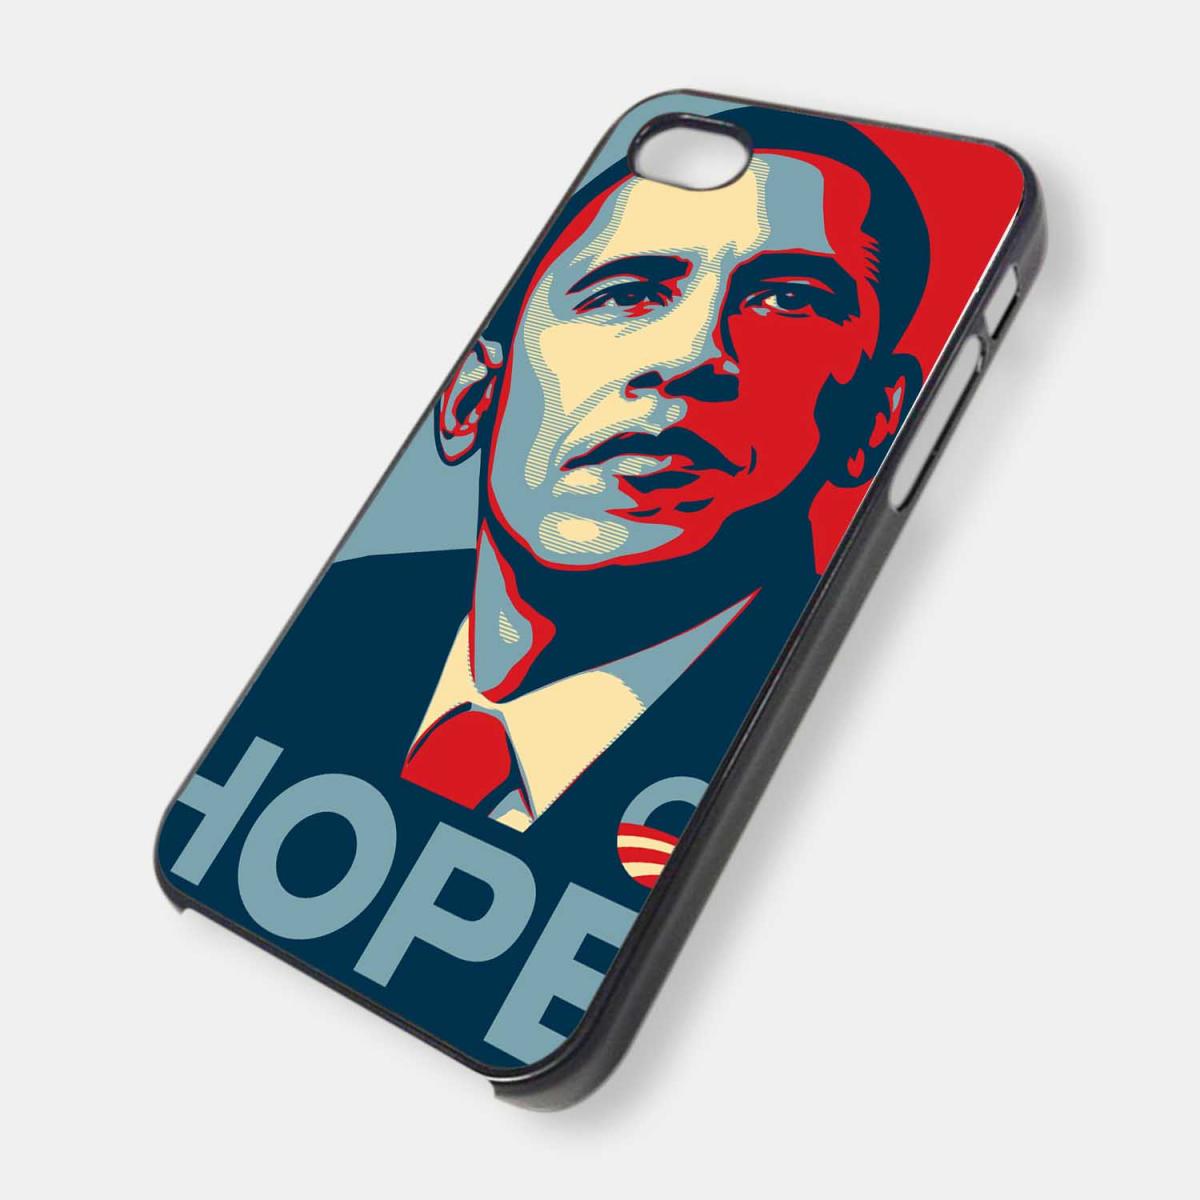 Obama Cool Special Design Iphone 4 Case Cover